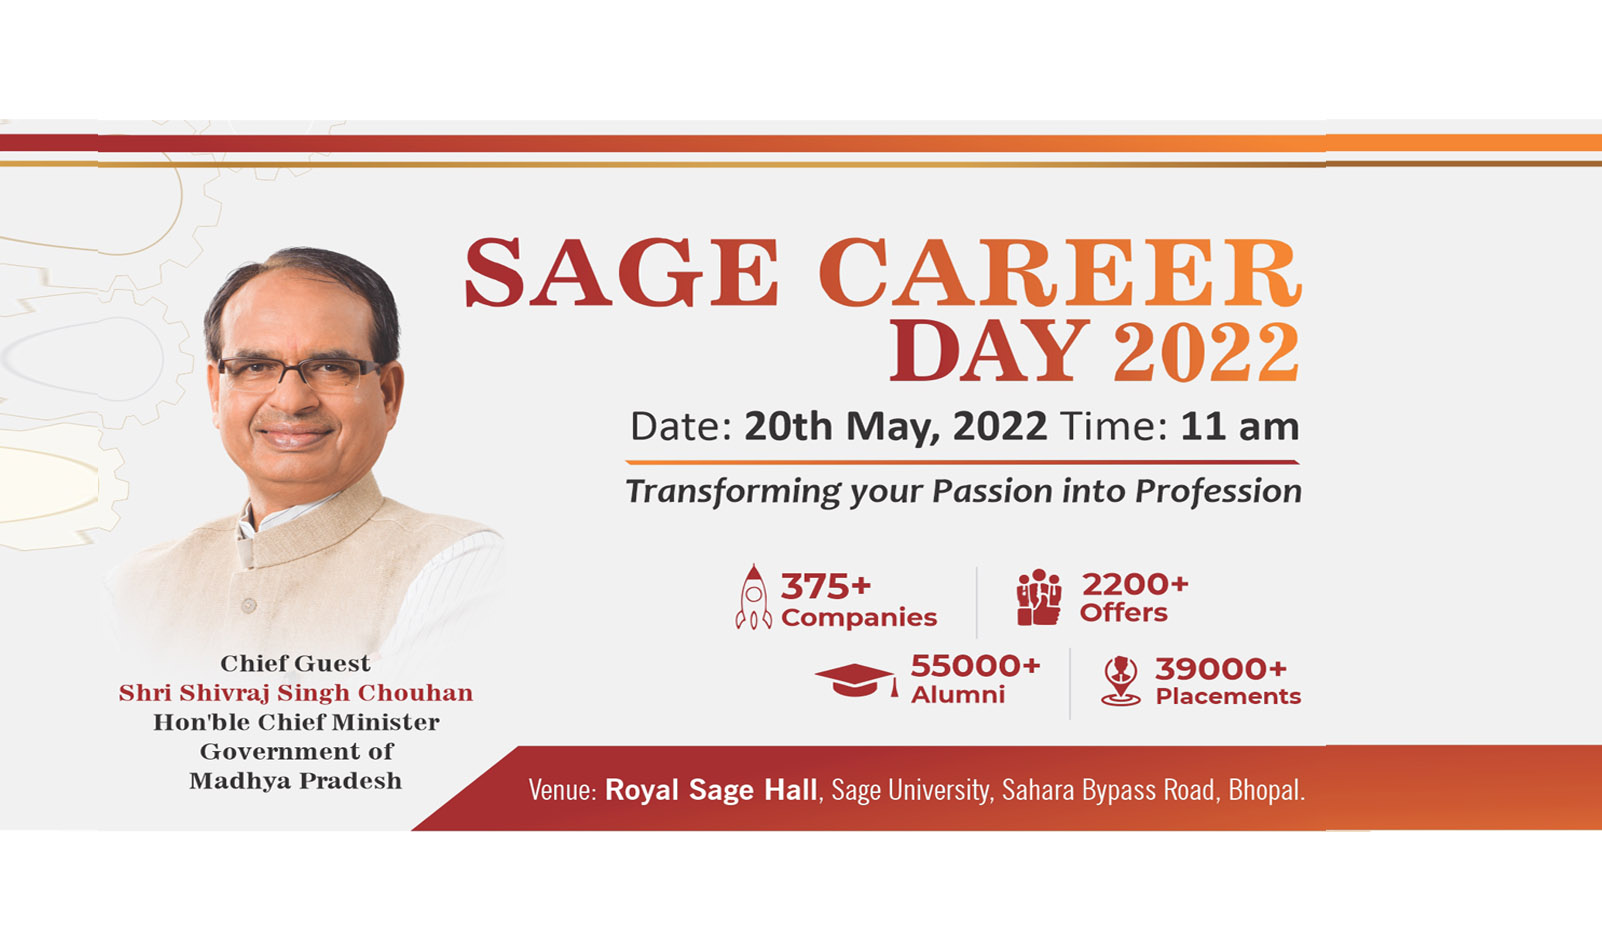 Sage Career Day 2022